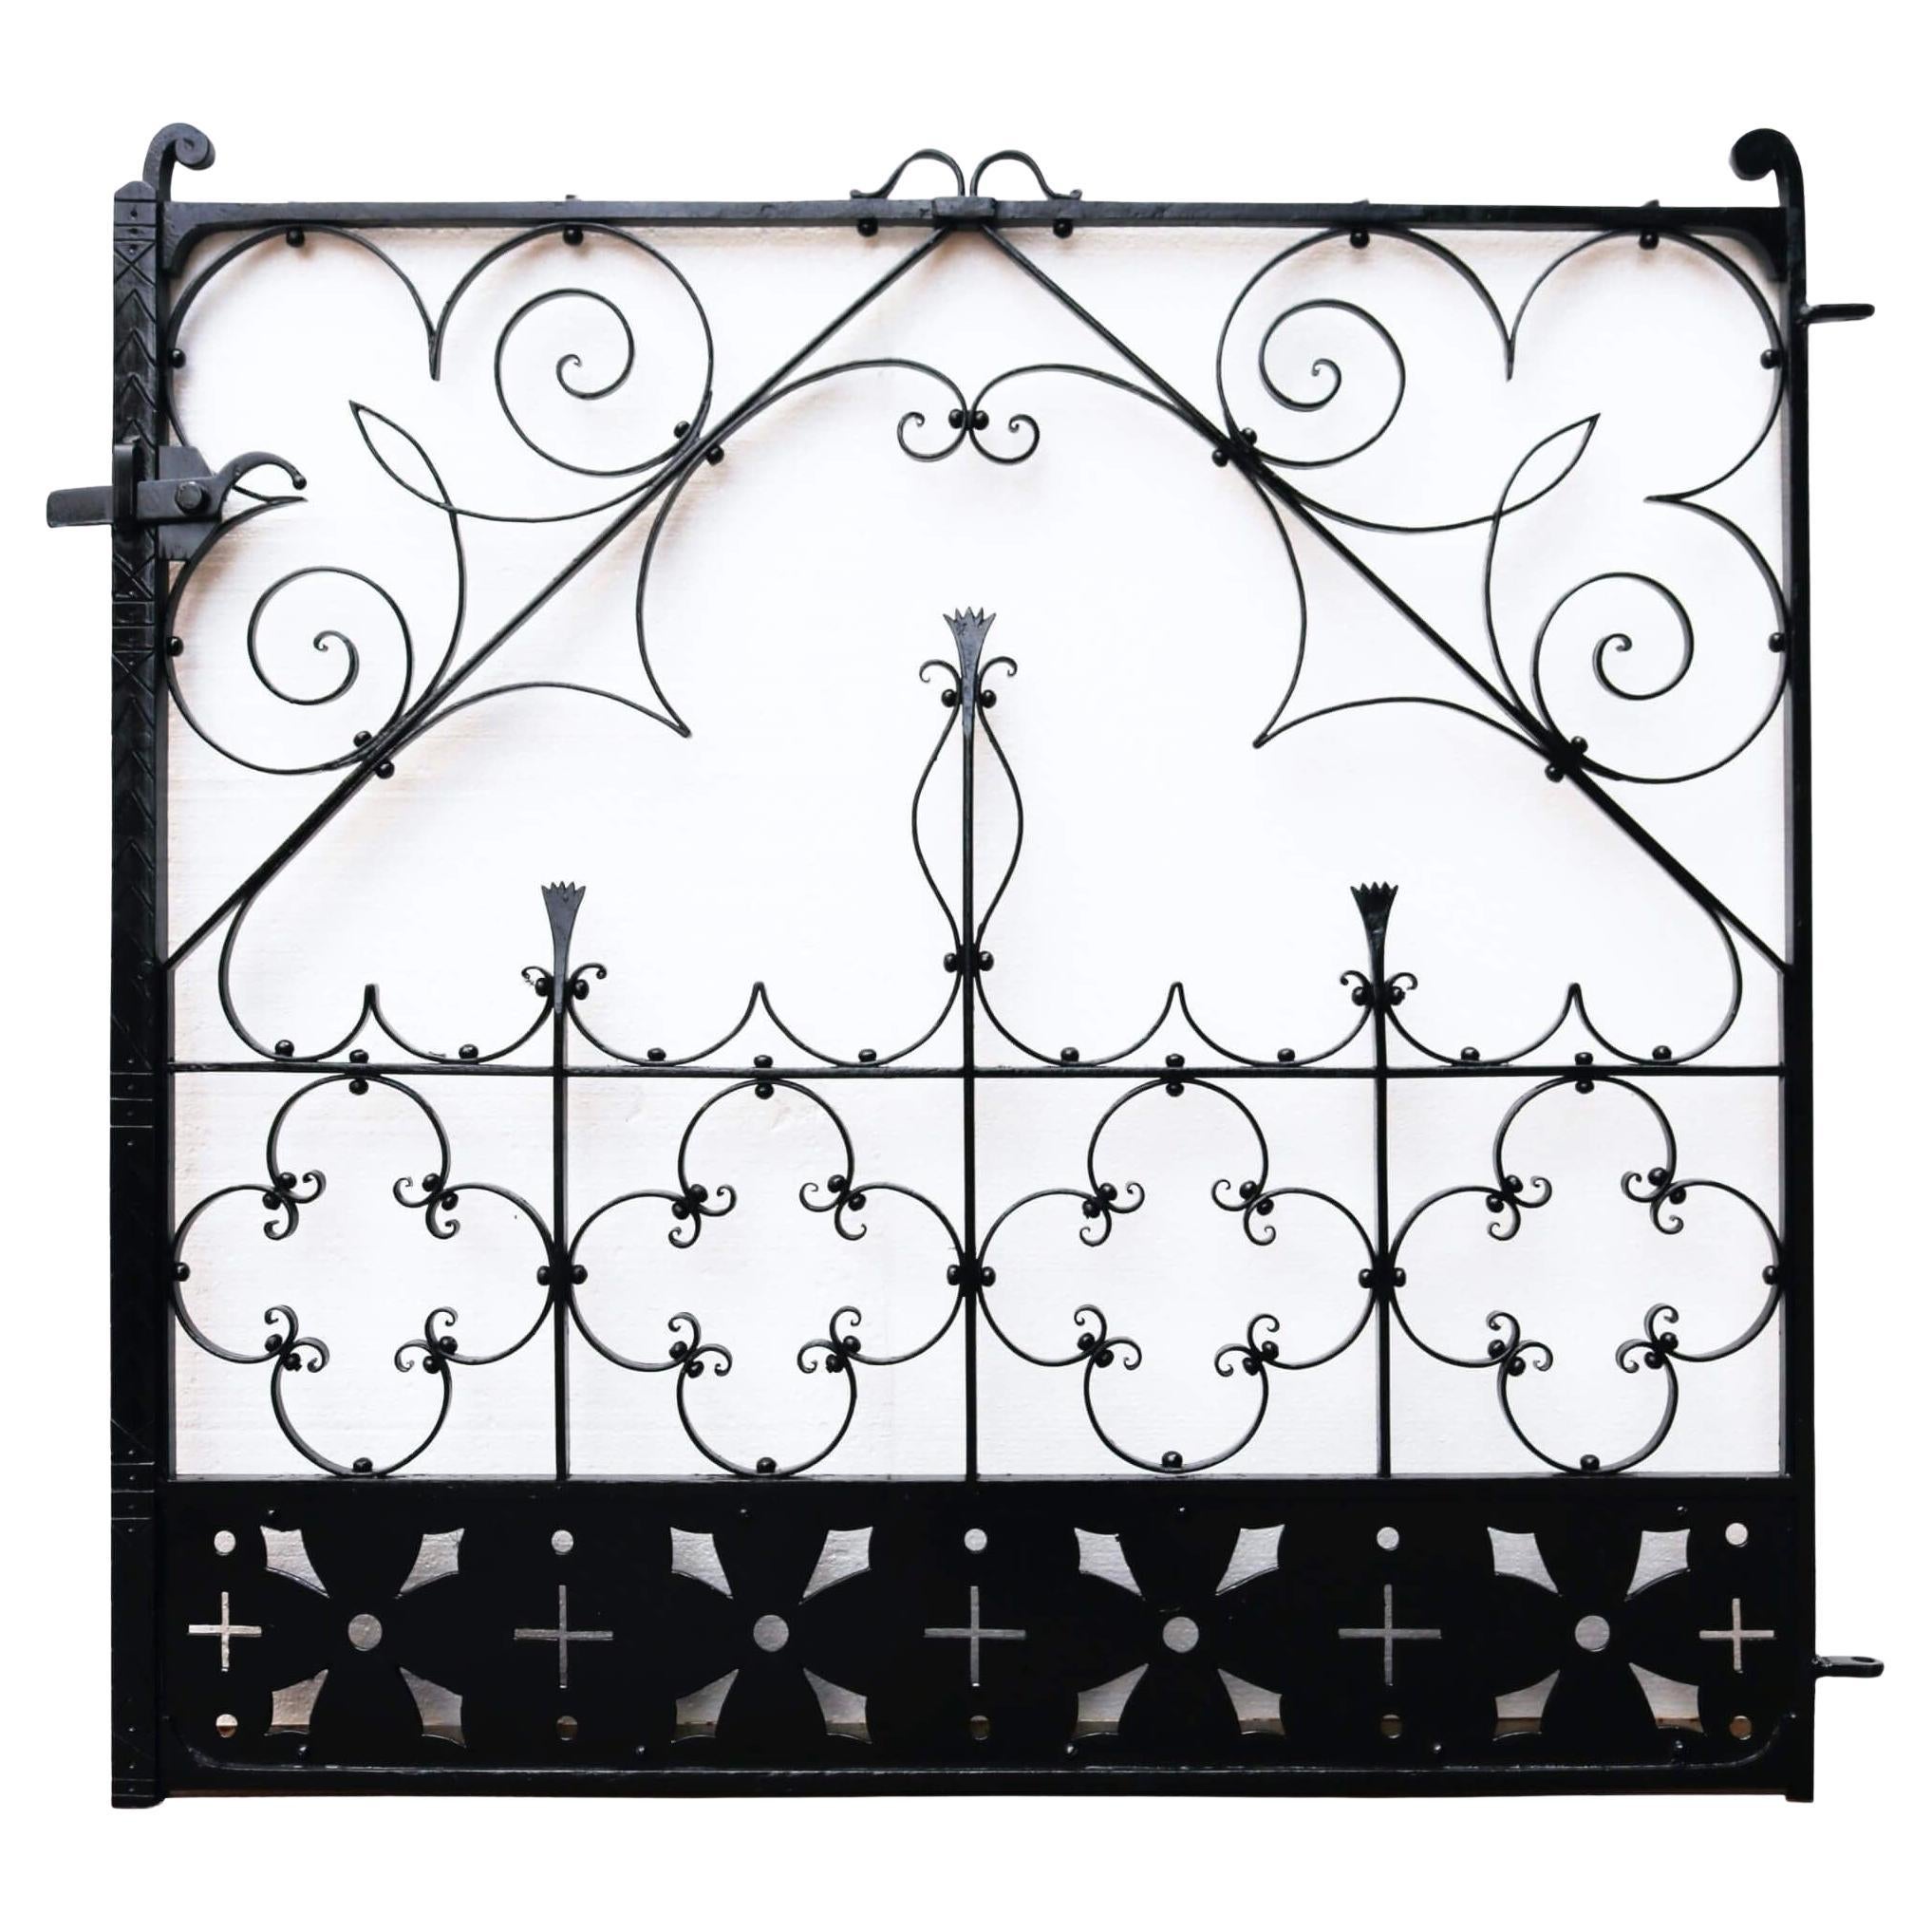 Decorative Wrought Iron Garden Gate